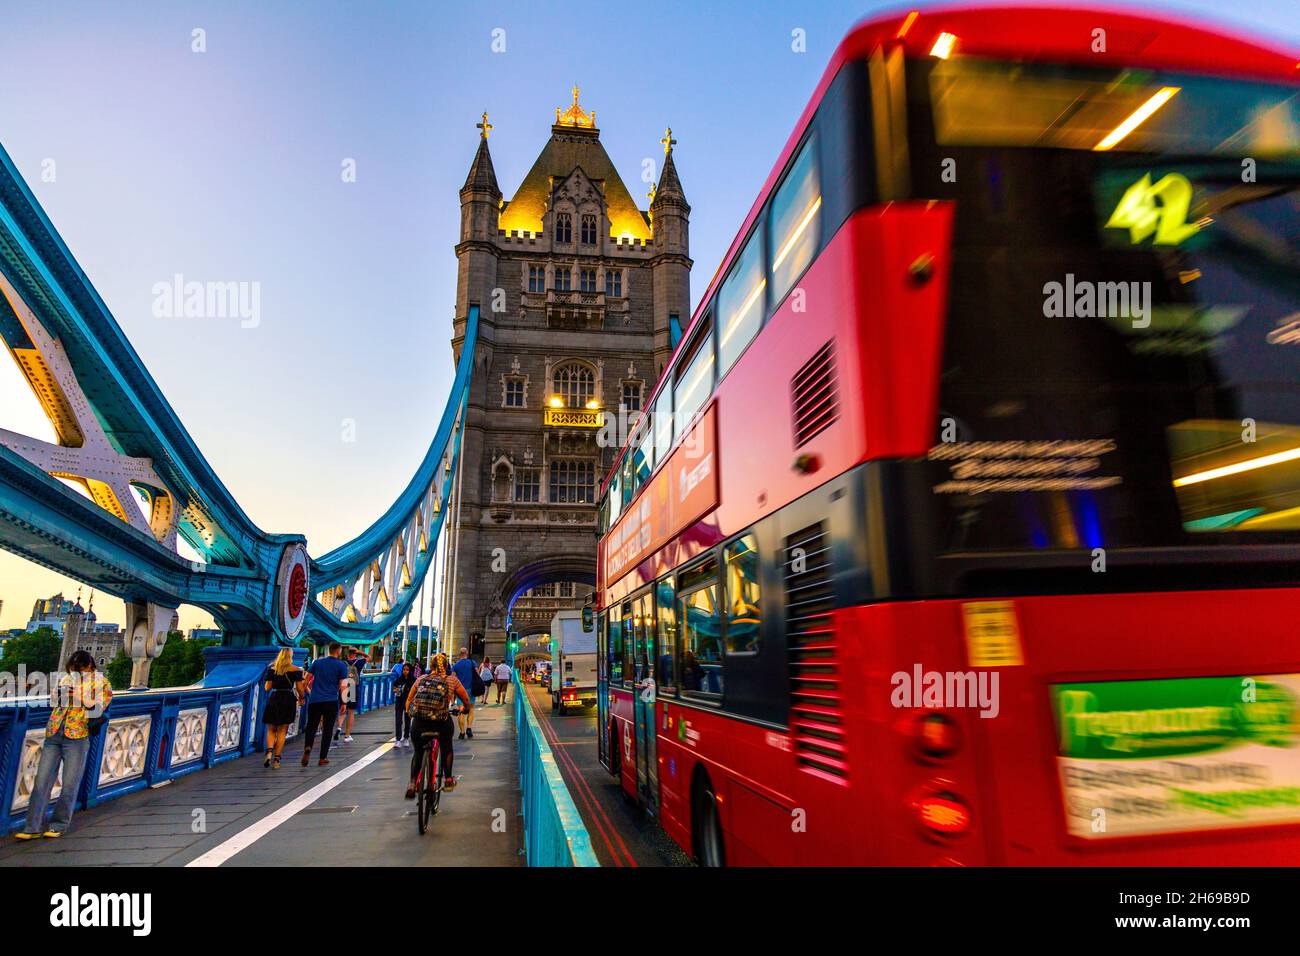 Red double decker bus crossing Tower Bridge at night, London, UK Stock Photo